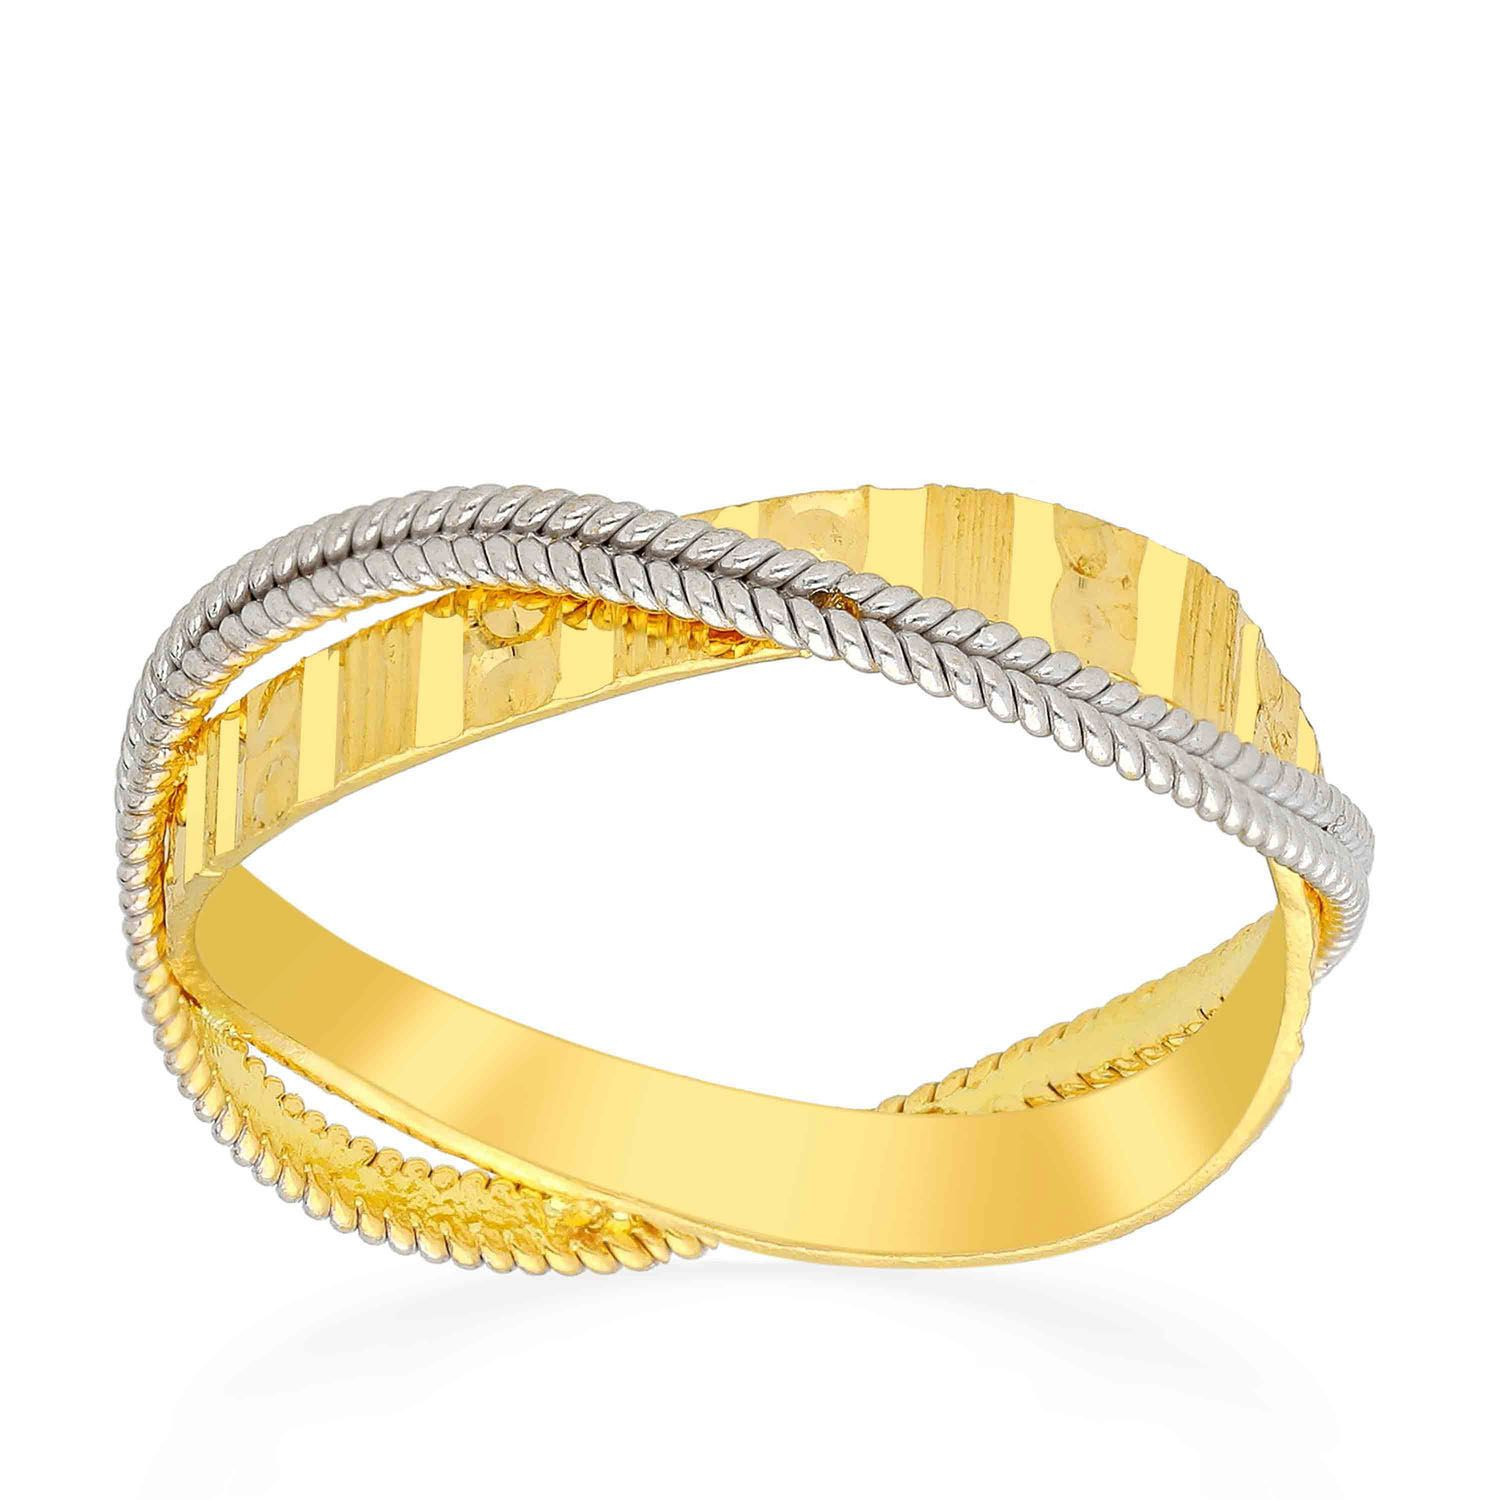 Buy Malabar Gold Ring RG9440520 for Women Online | Malabar Gold & Diamonds